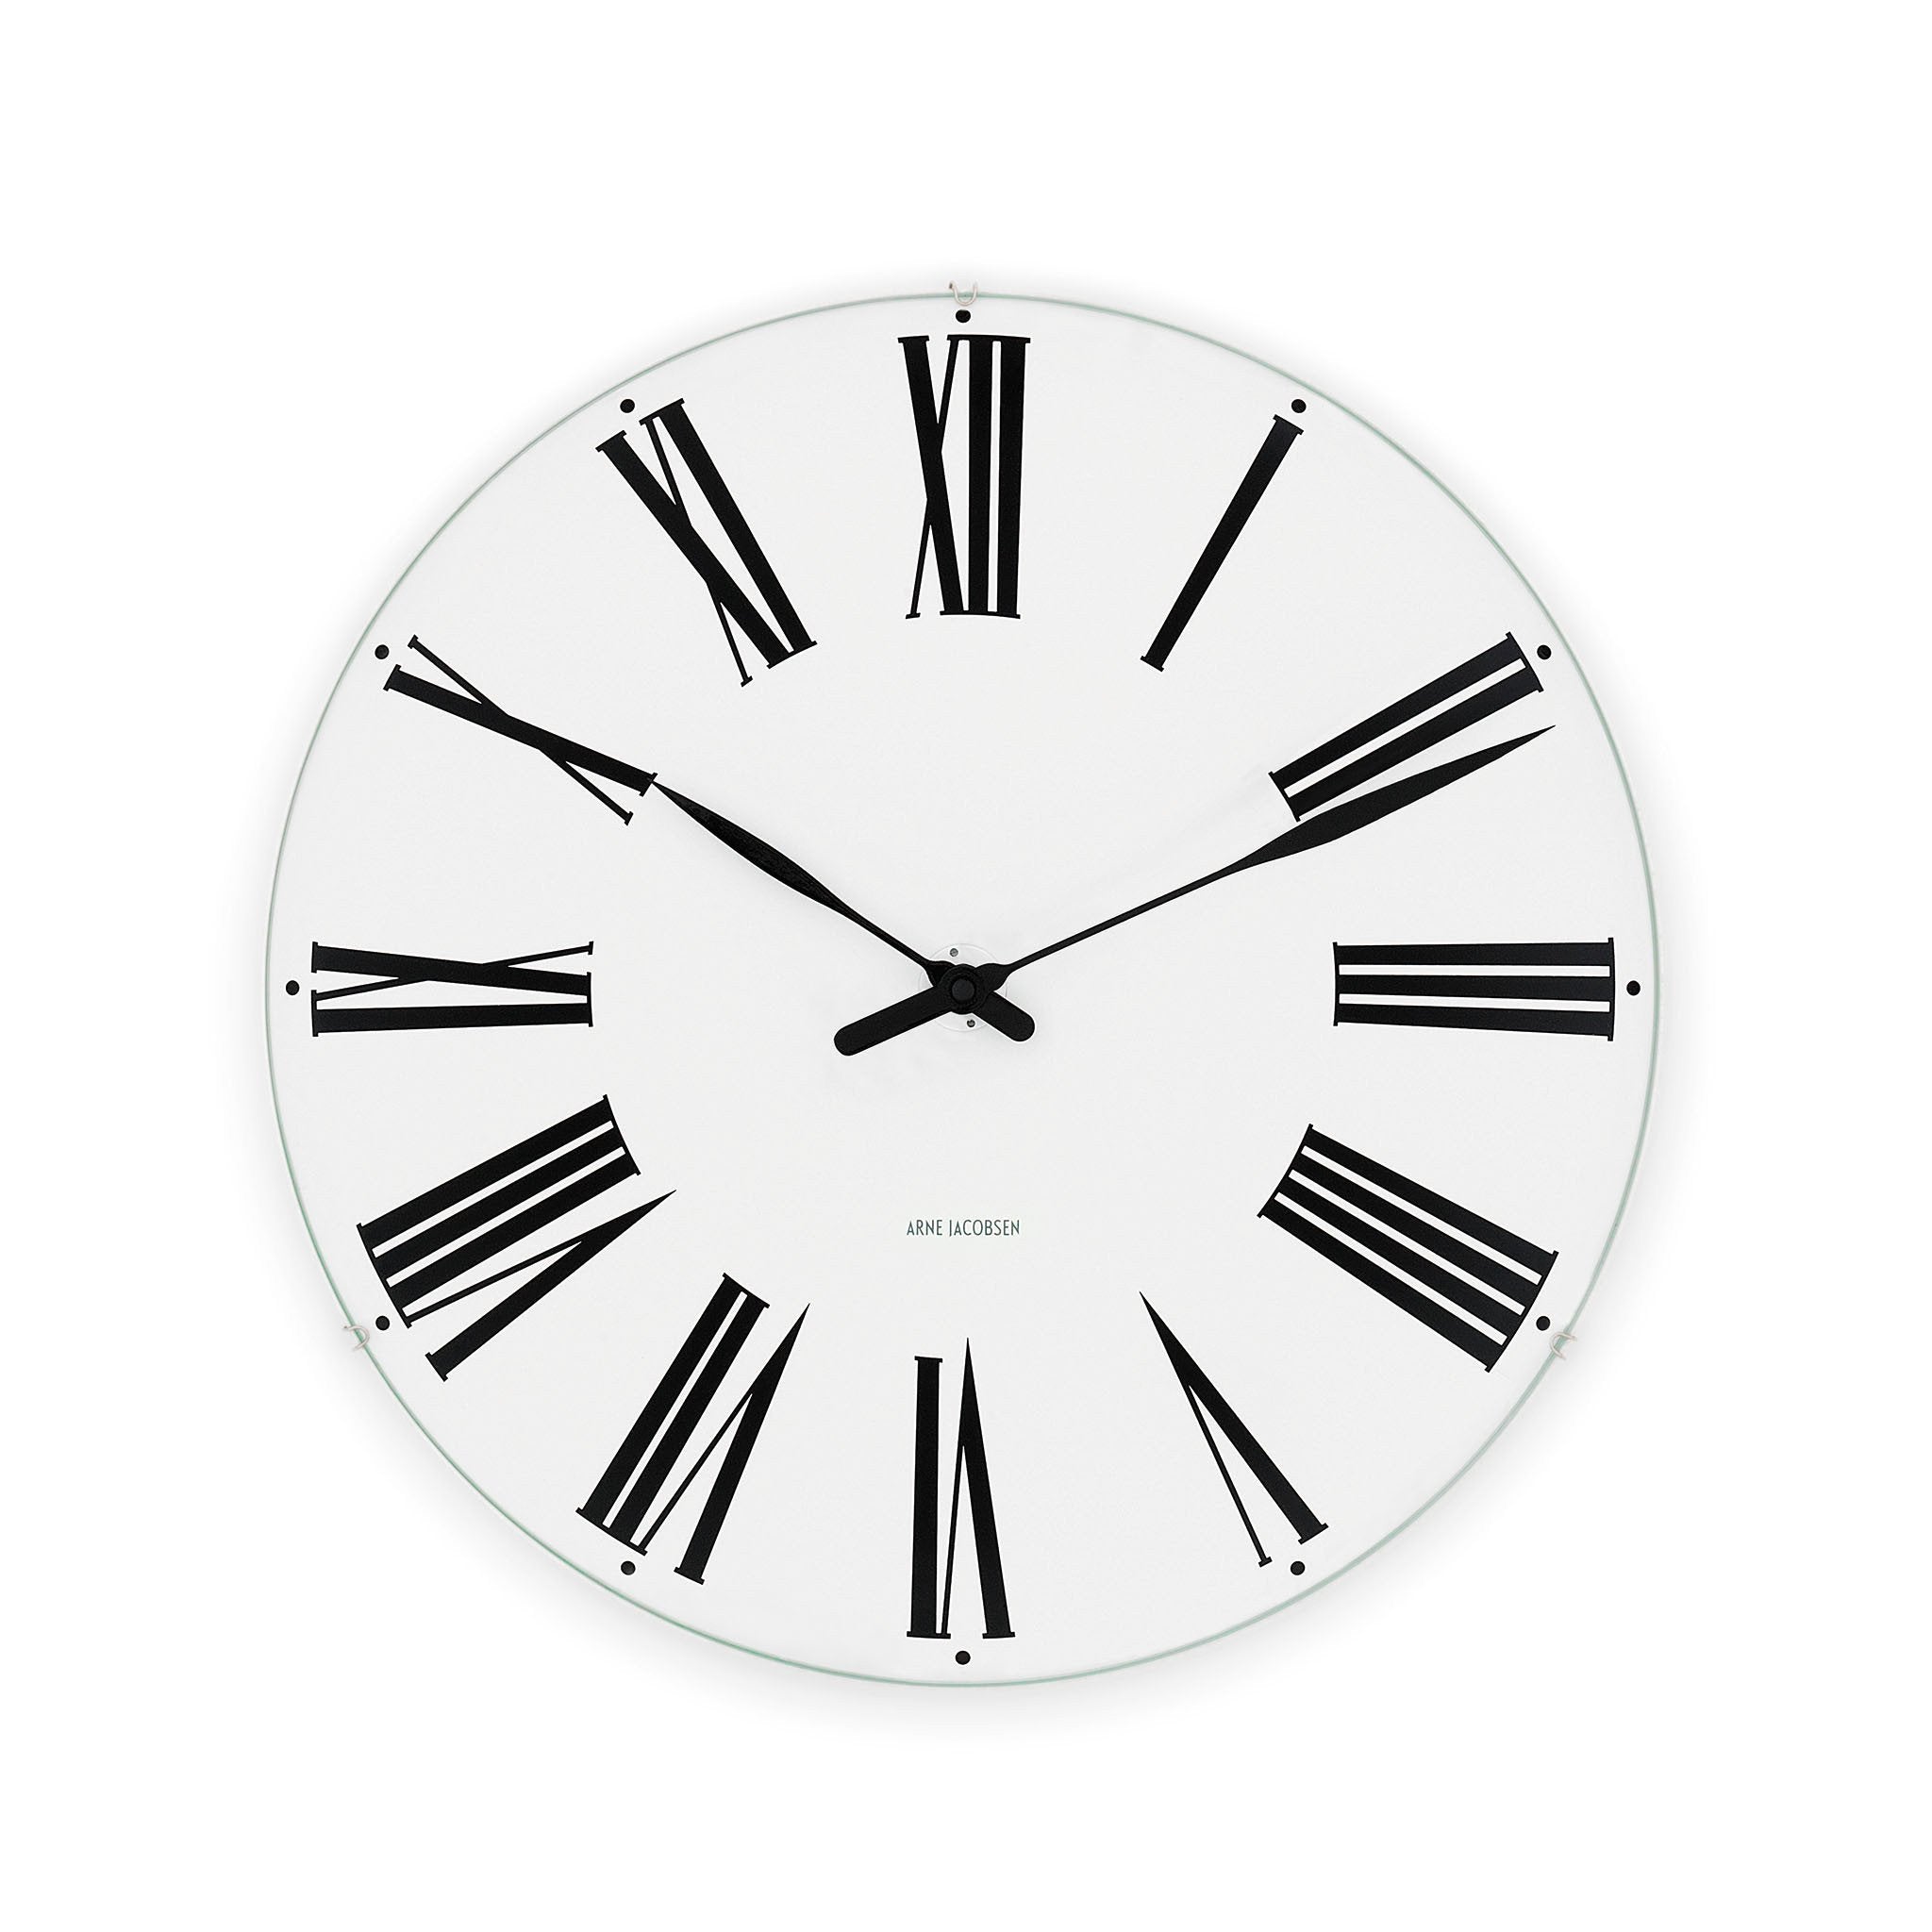 Arne Jacobsen Roman Wall Clock, 8.3" / 21 cm